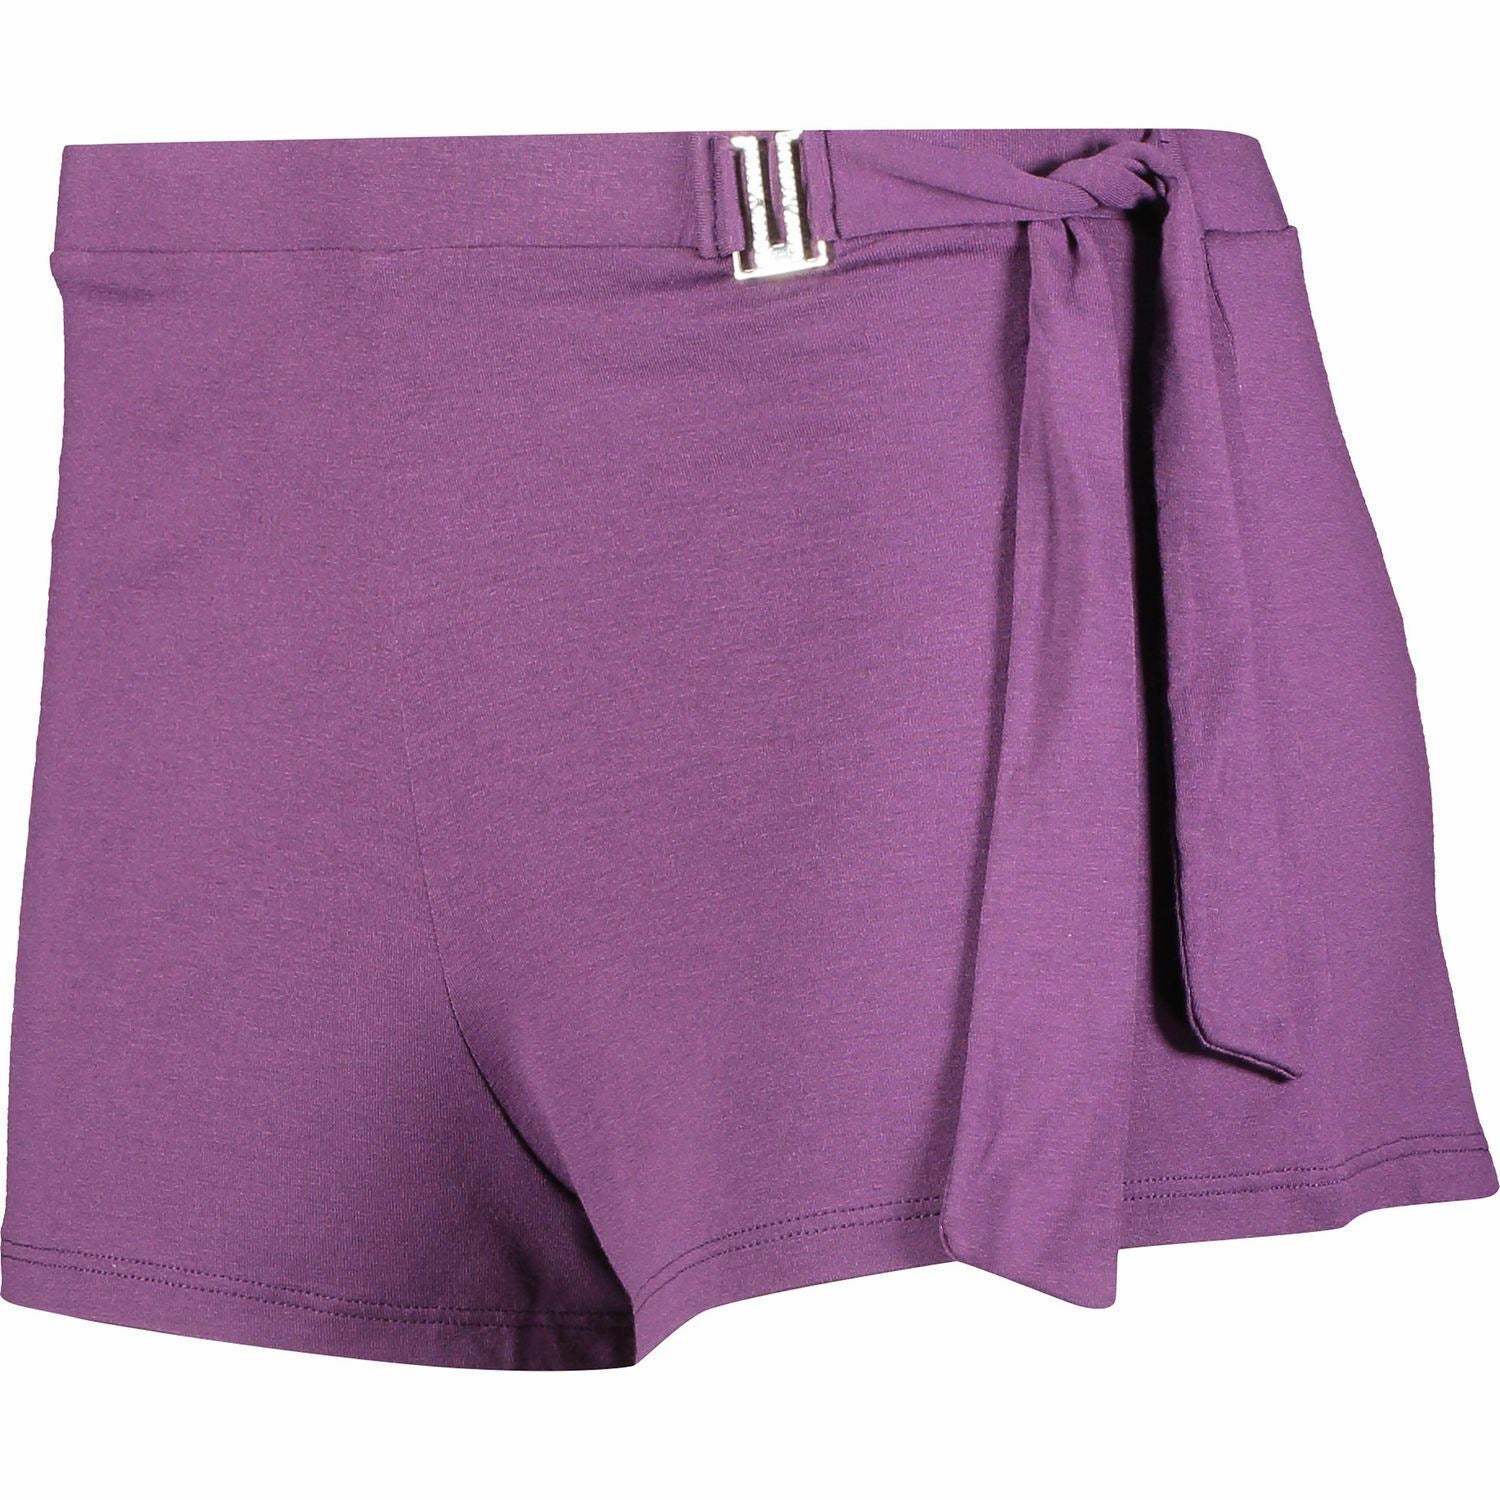 EMPORIO ARMANI Women's Purple Swimming Shorts -  Size XS Size M Size L